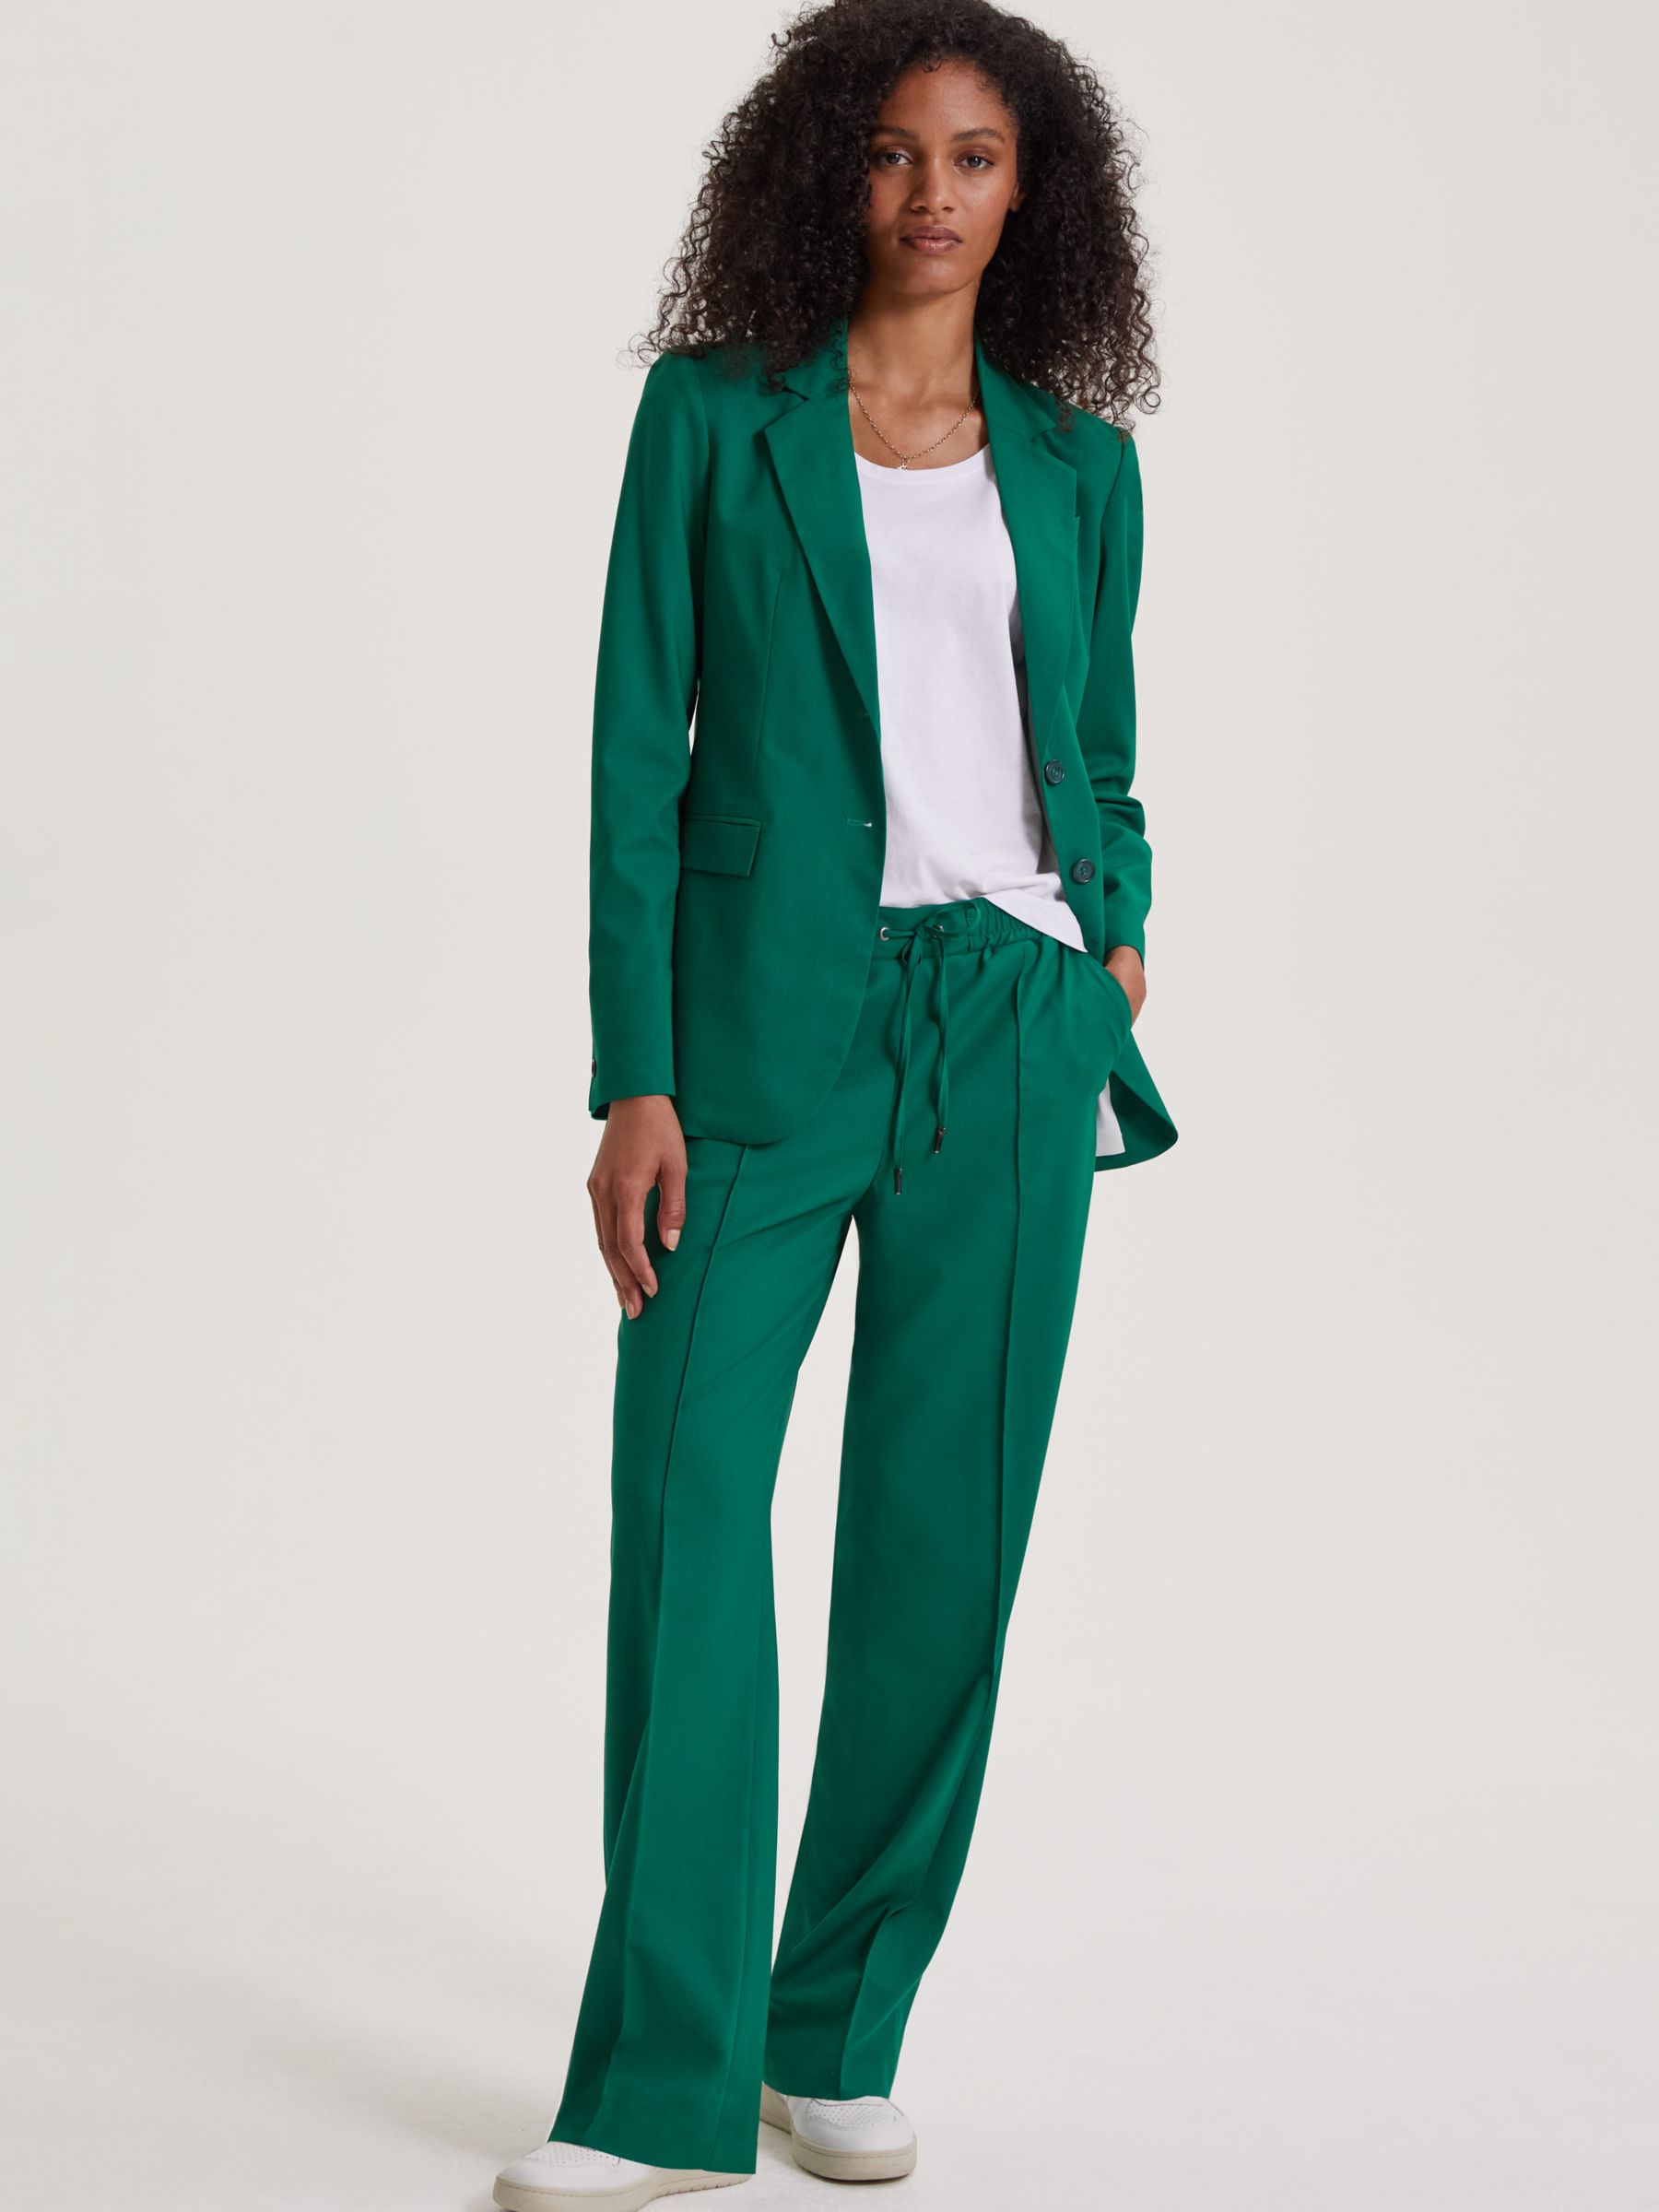 Baukjen Fera Casual Trousers, Emerald Green at John Lewis & Partners